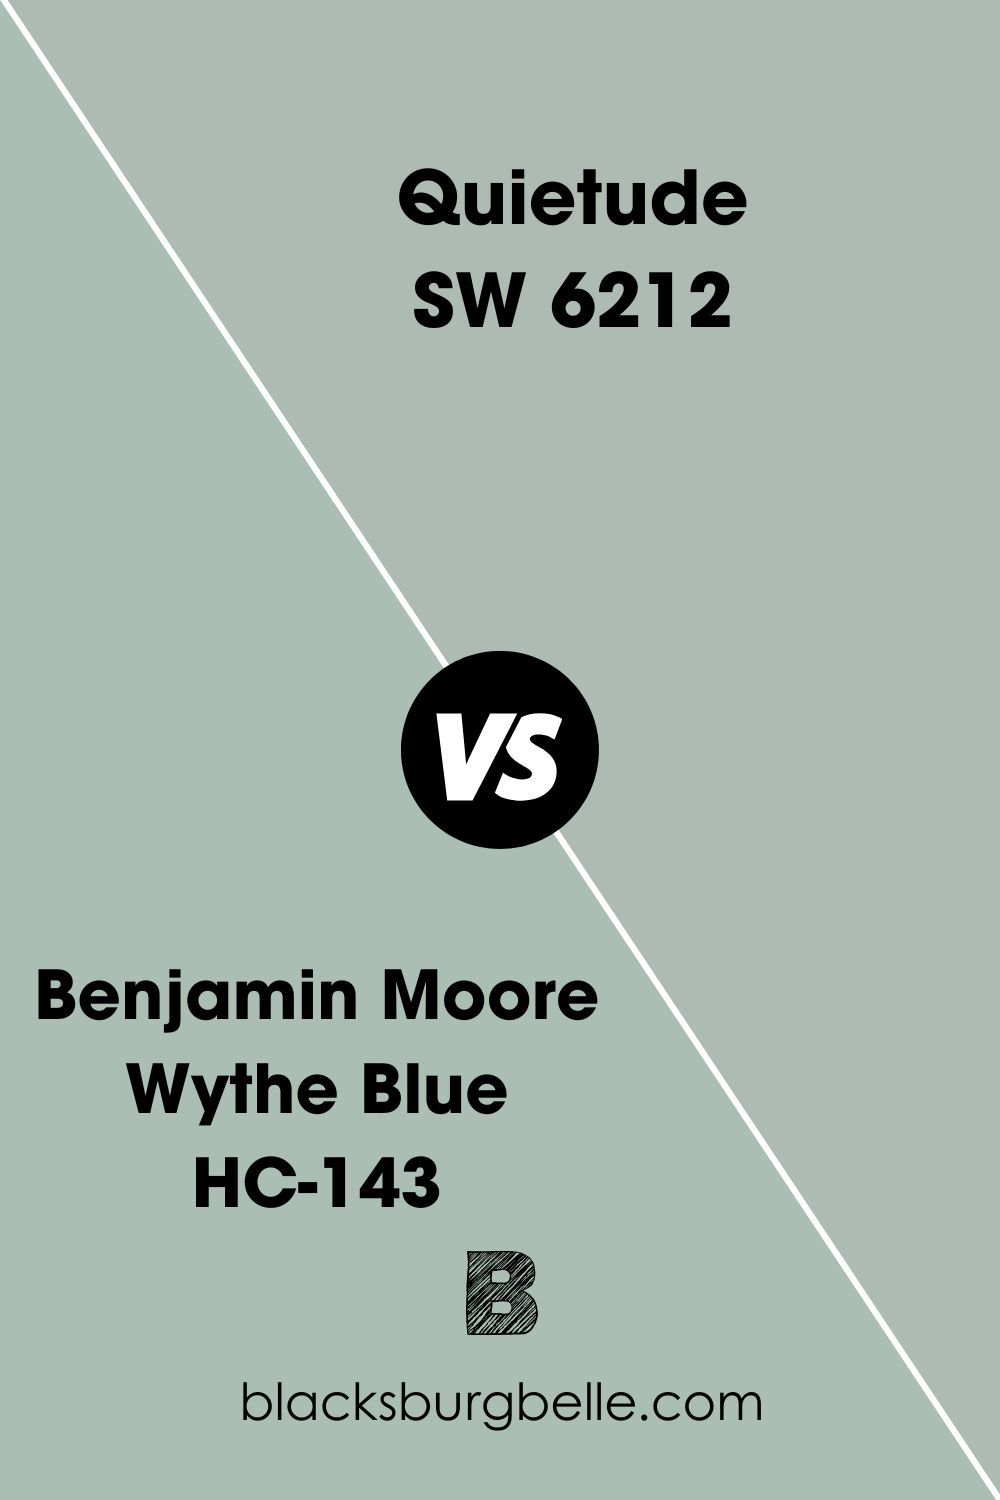 Benjamin Moore Wythe Blue HC-143 